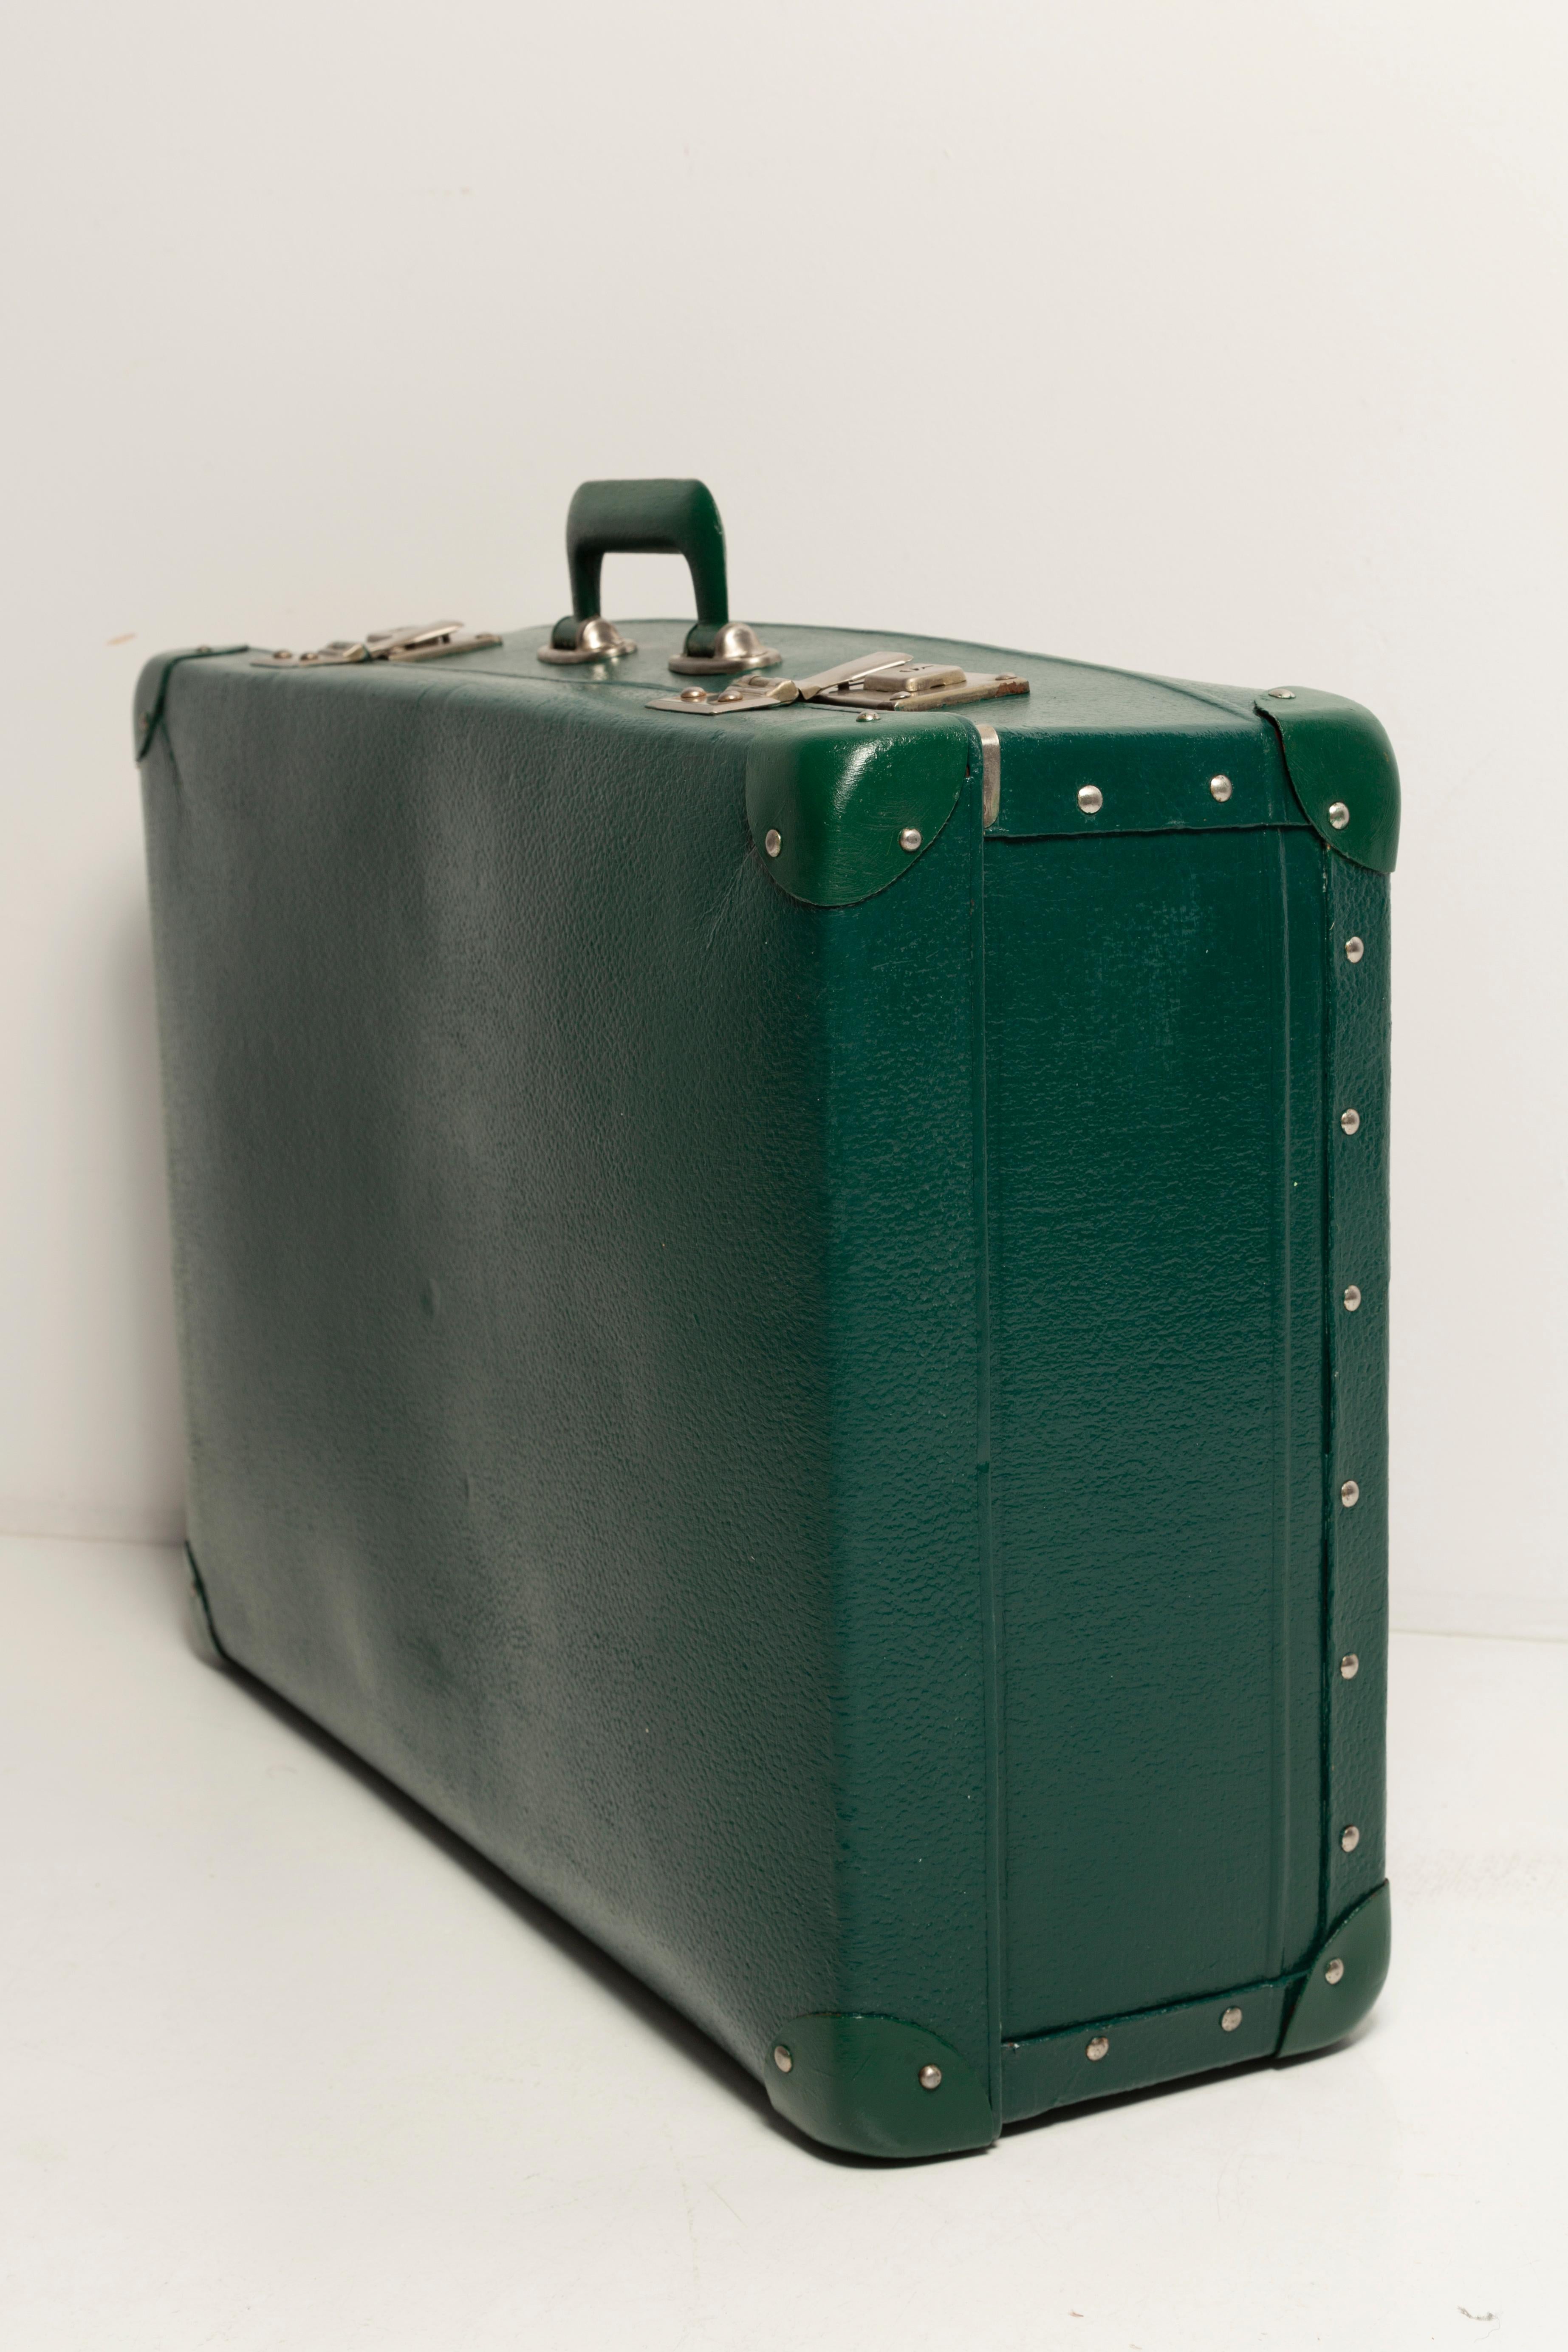 Metal Midcentury Old Vintage Green Suitcase, Storage, Decoration, Europe, 1970s For Sale